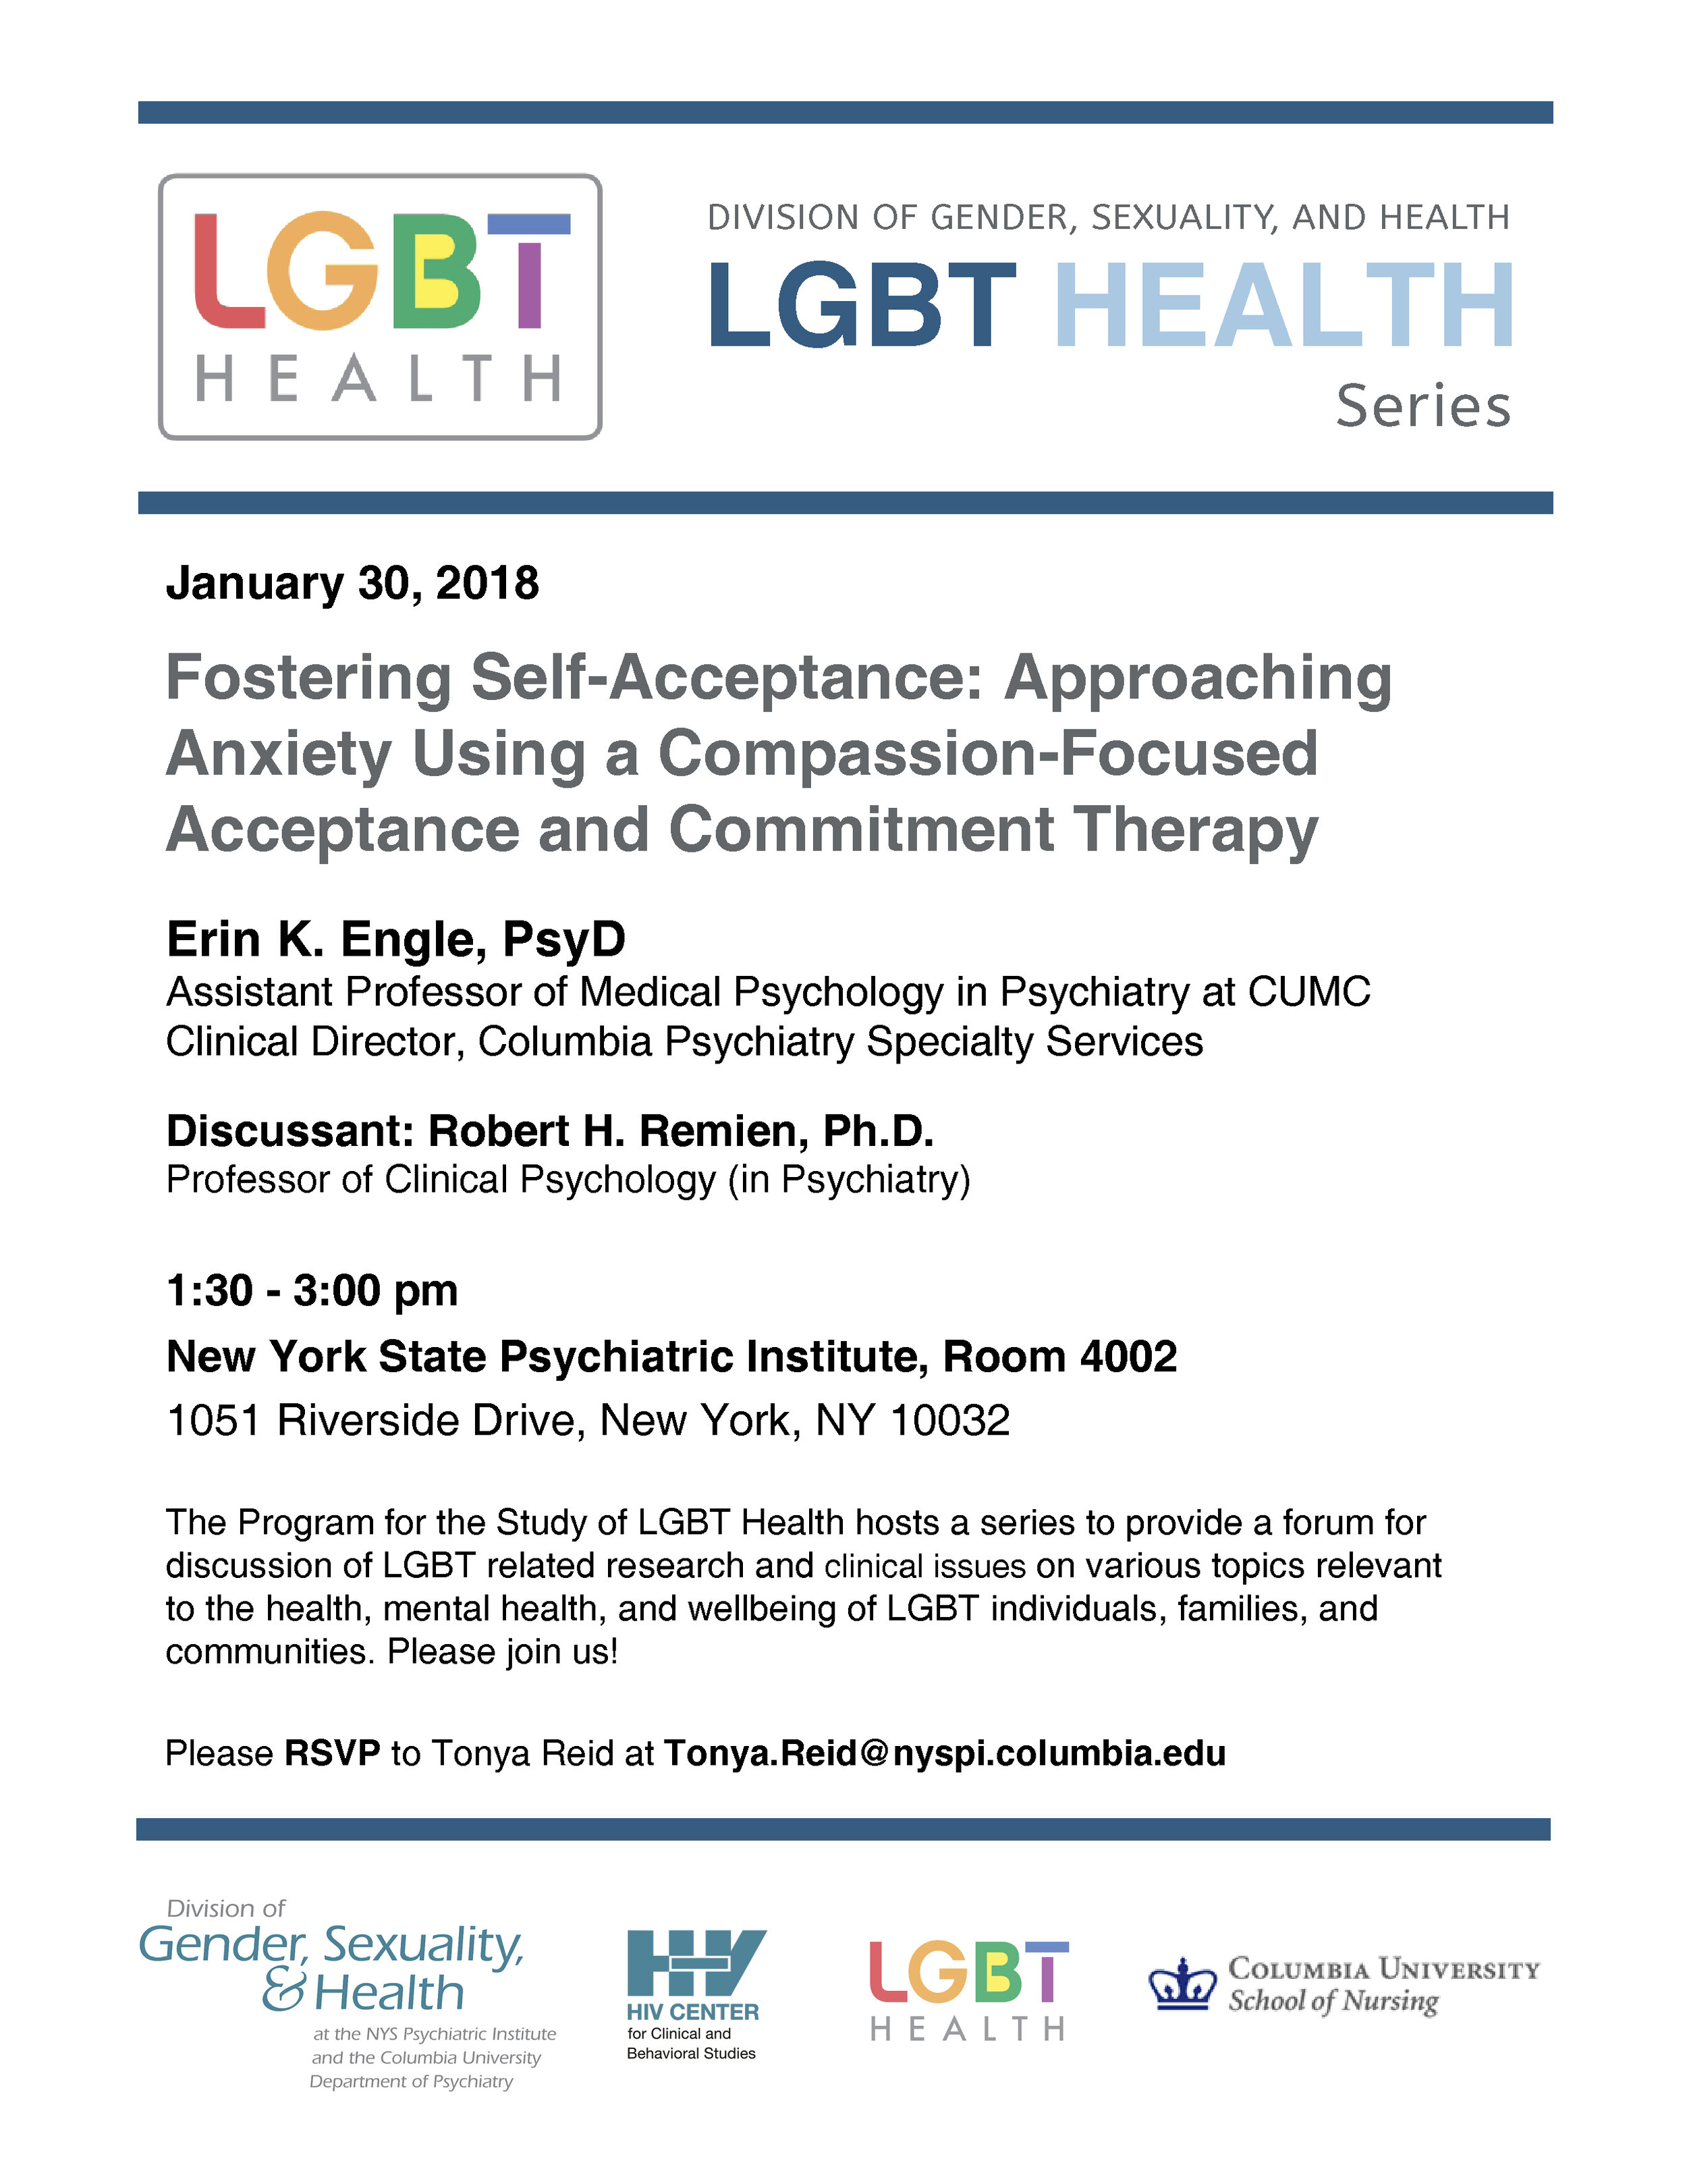 LGBT Health Series Jan 30 2018.jpg